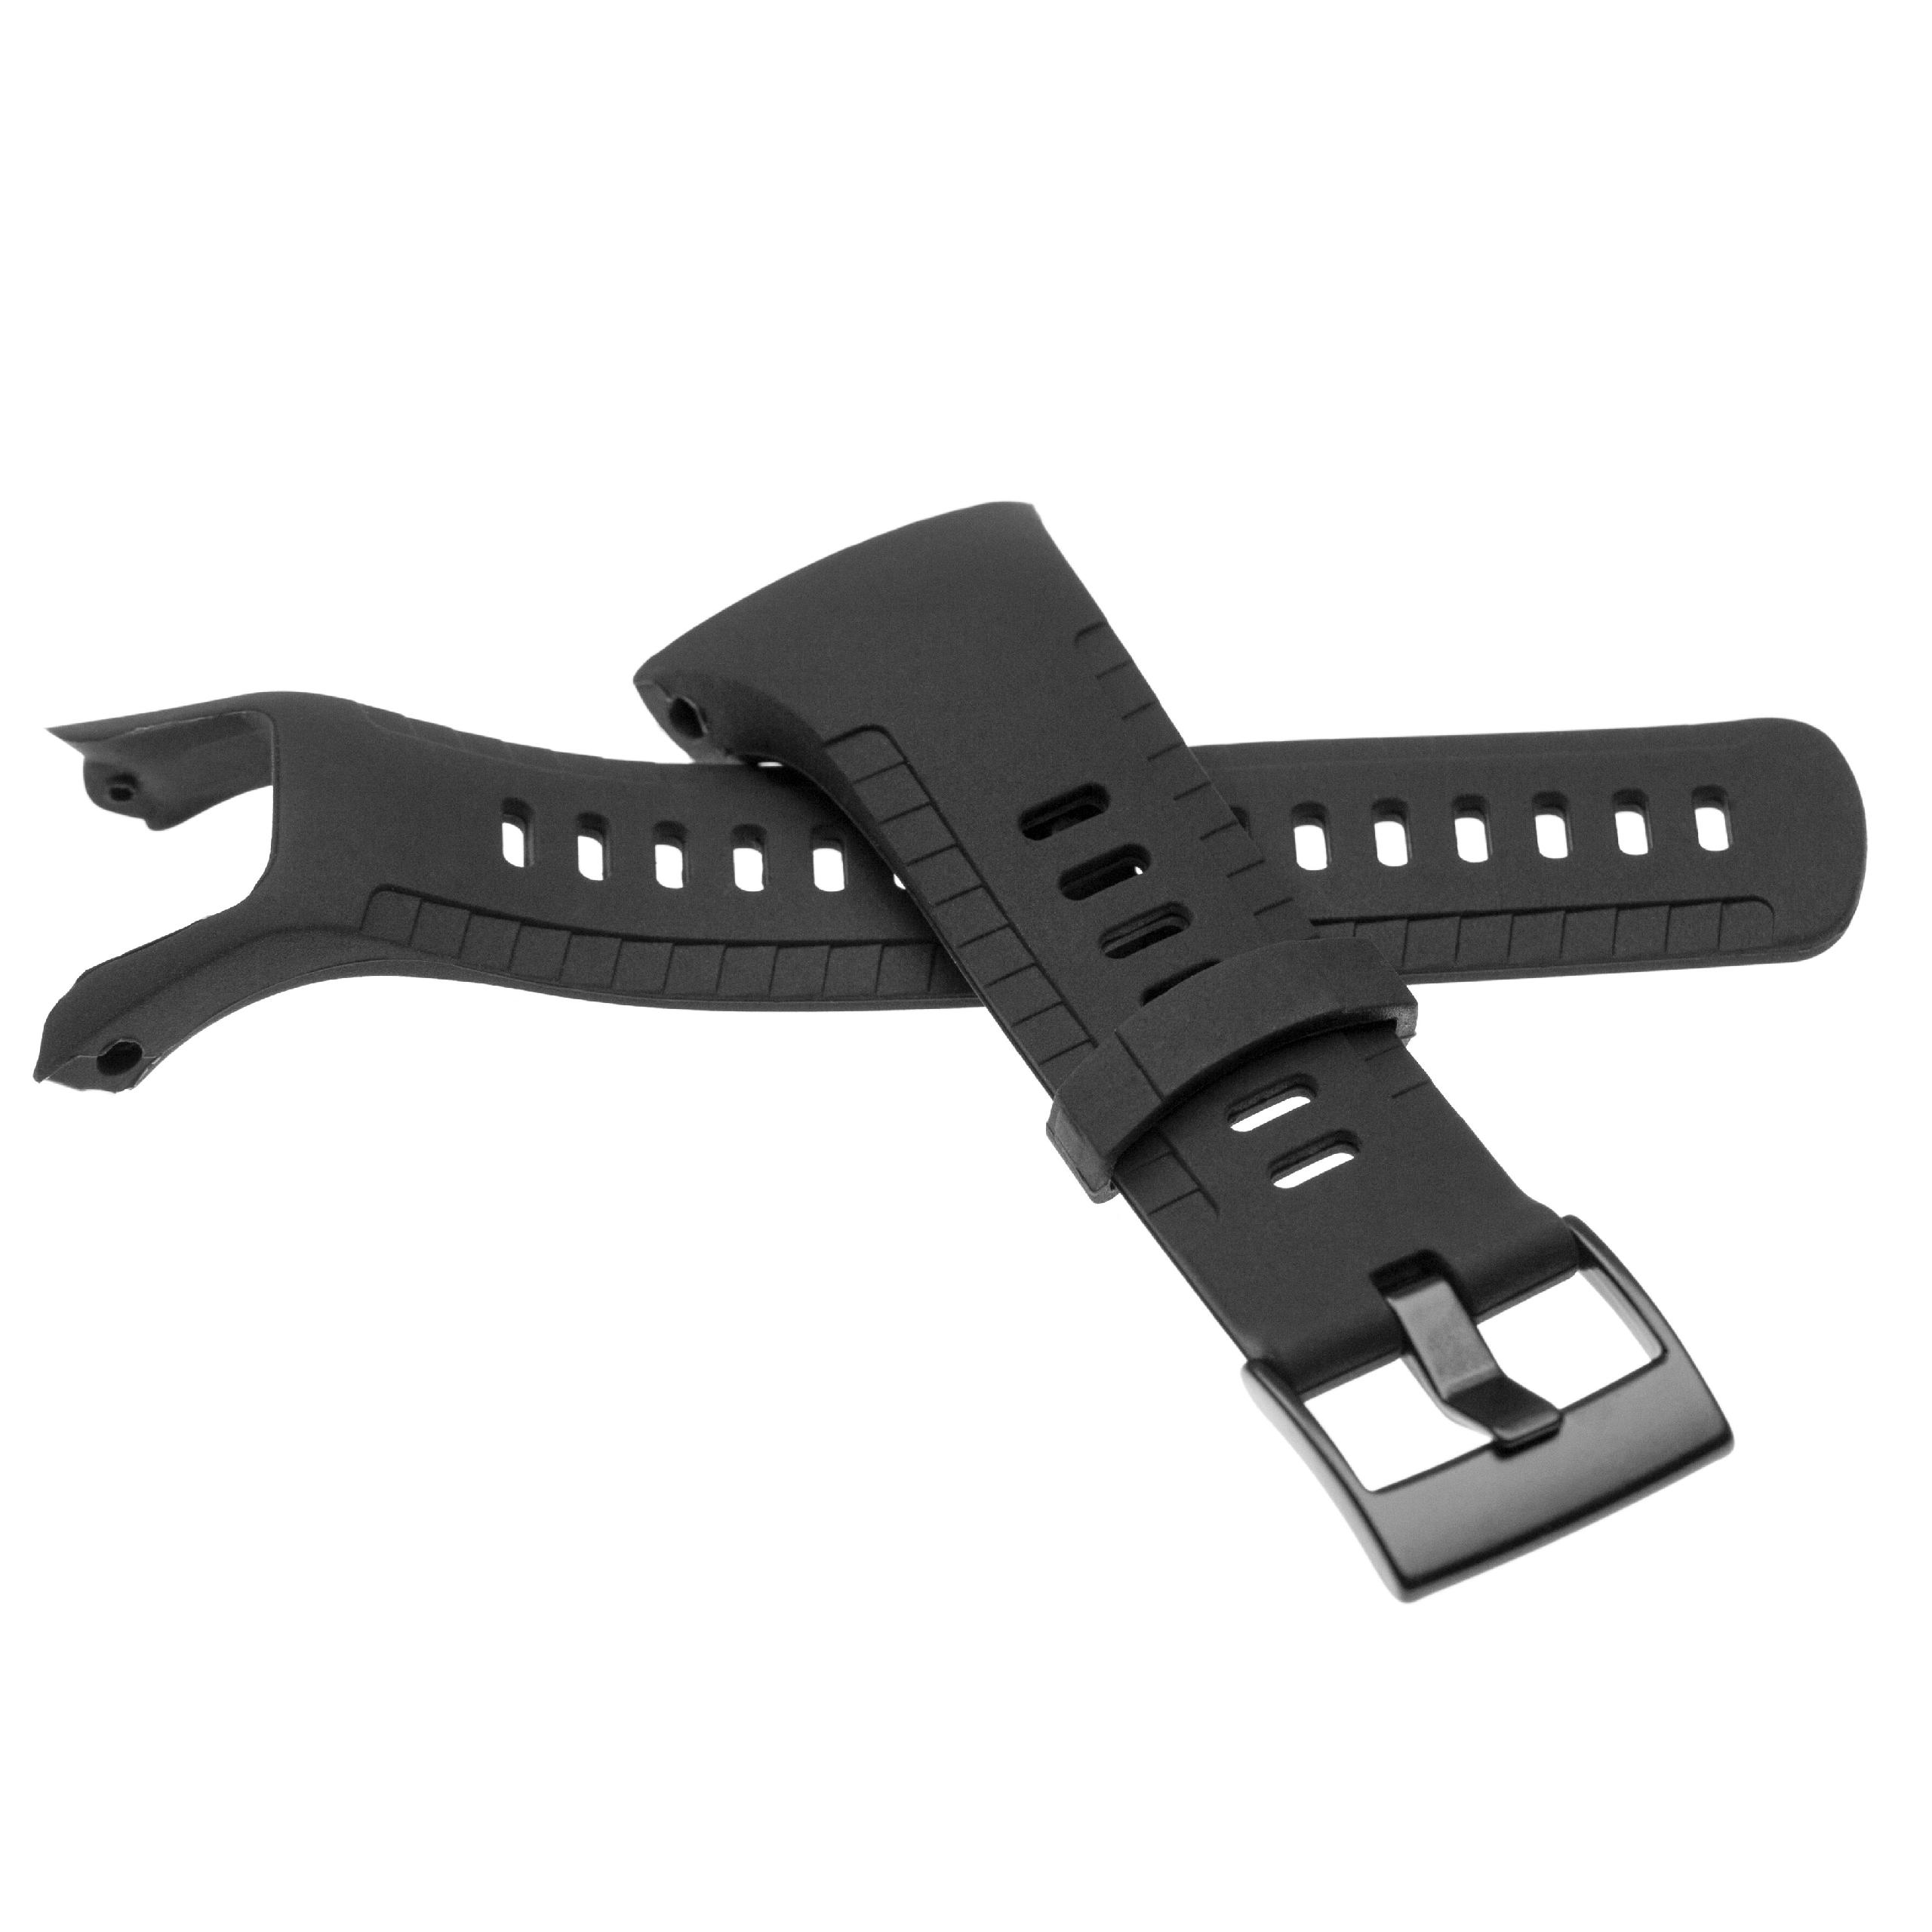 Armband für Suunto Smartwatch - 12,2 + 9,6 cm lang, 34mm breit, Silikon, schwarz